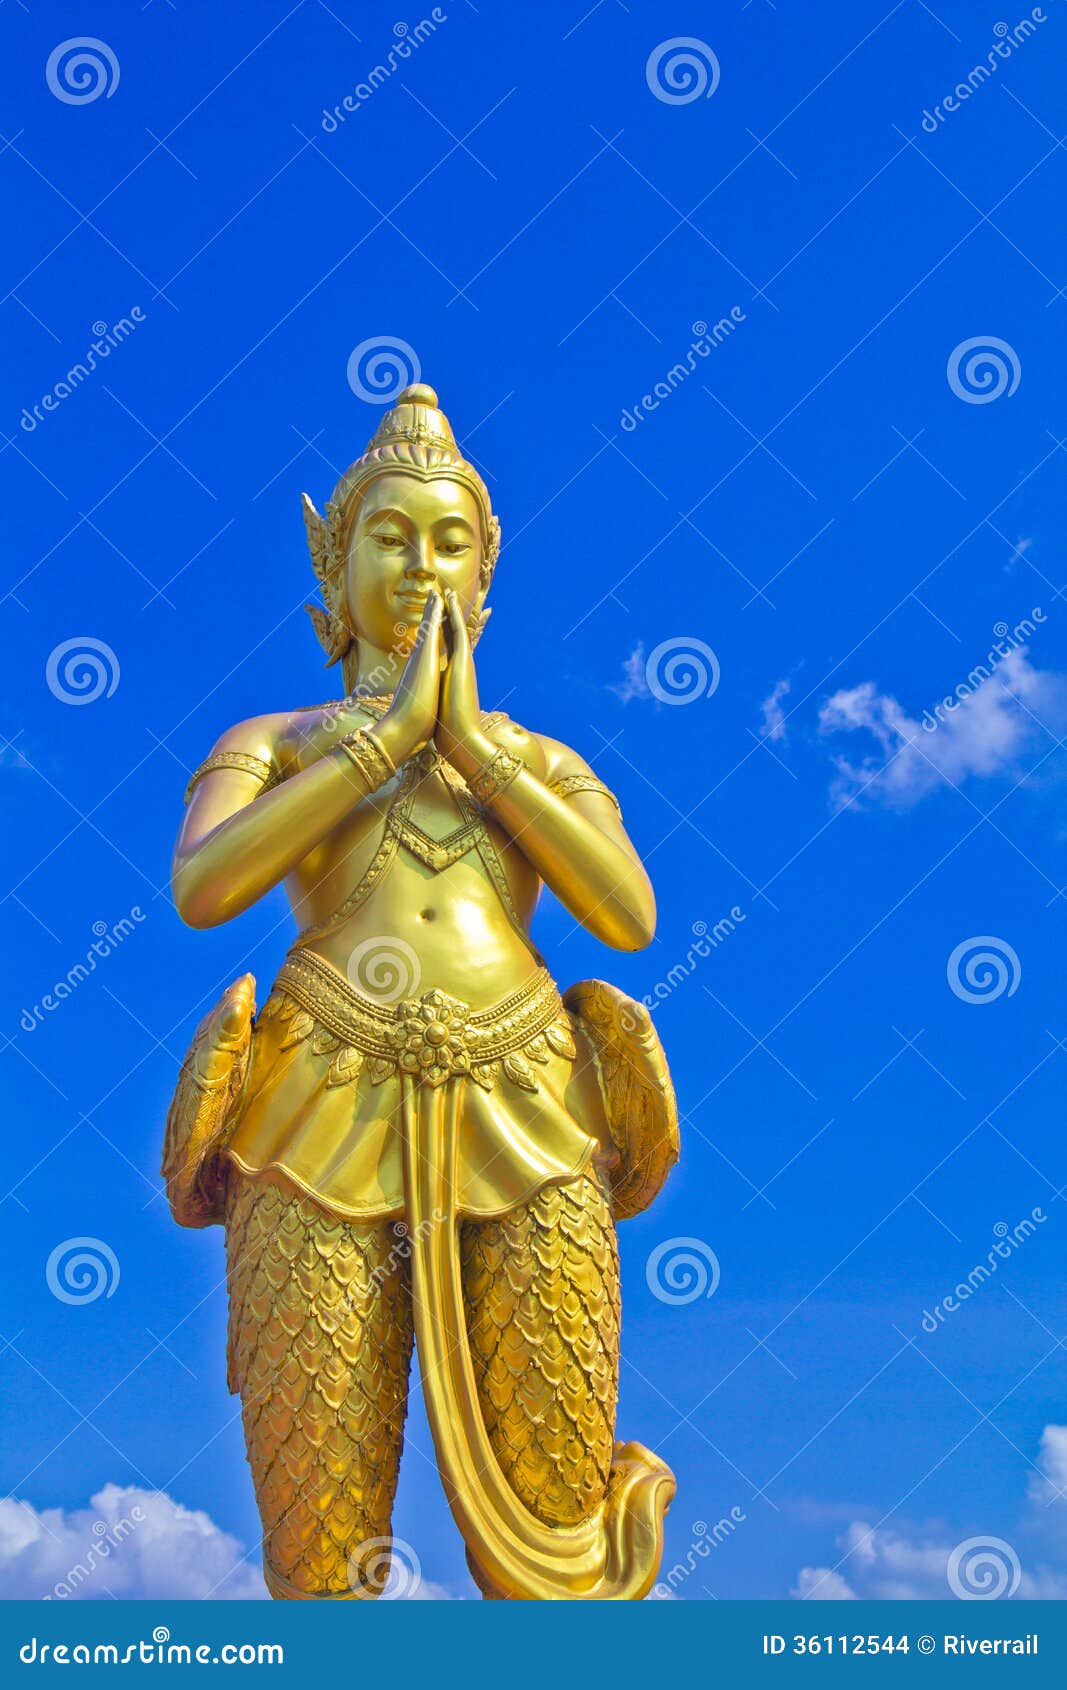 Kinnara statue stock photo. Image of human, golden, grunge - 36112544